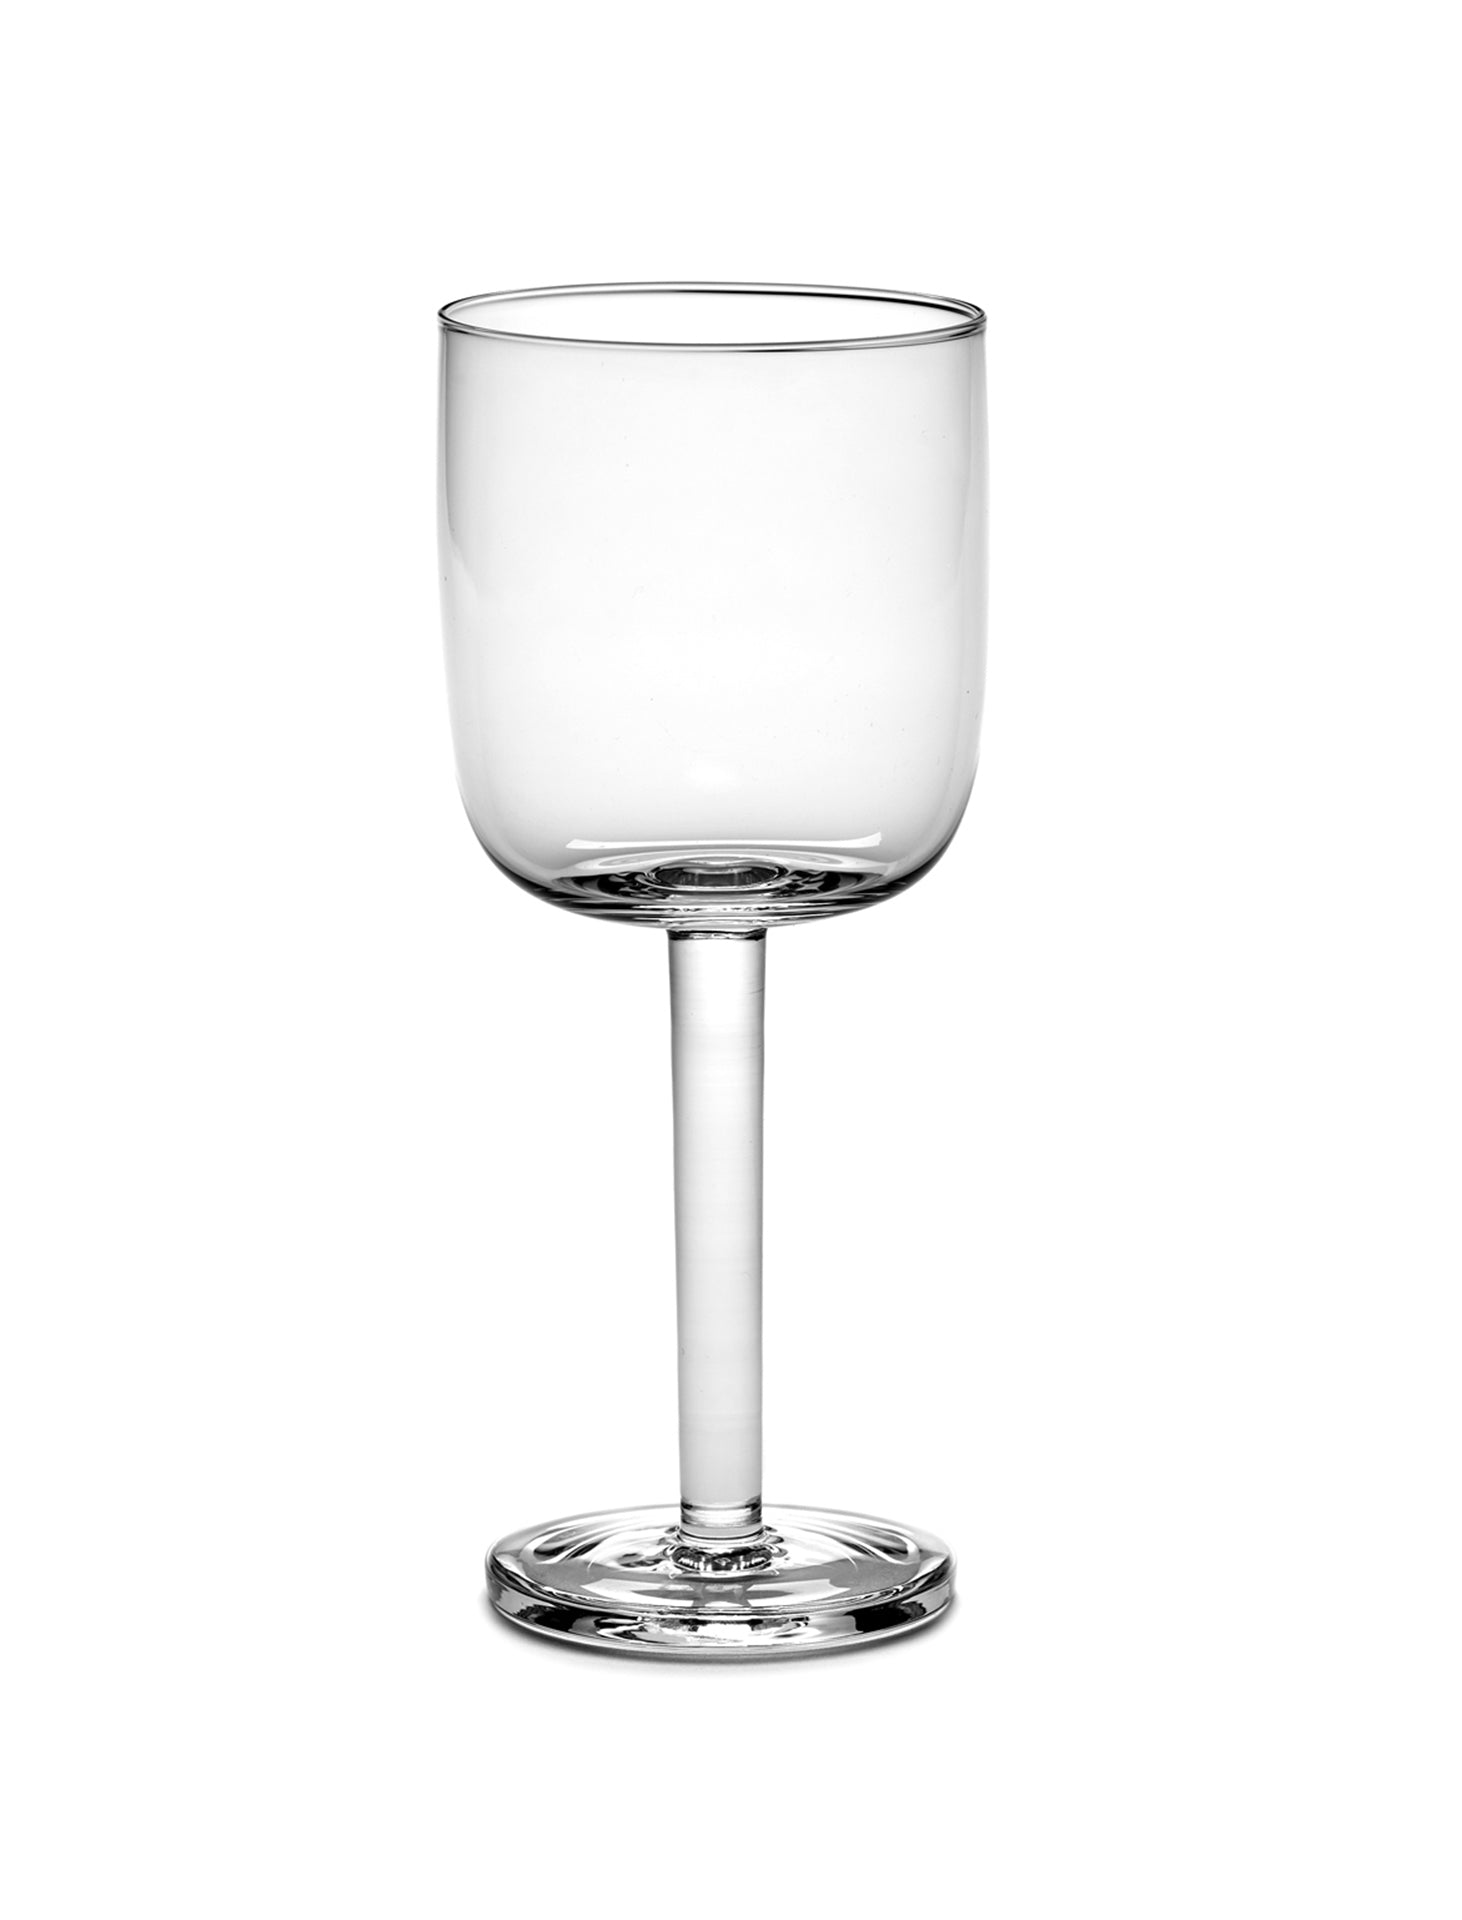 Piet Boon Base White Wine Glass, Set of 4